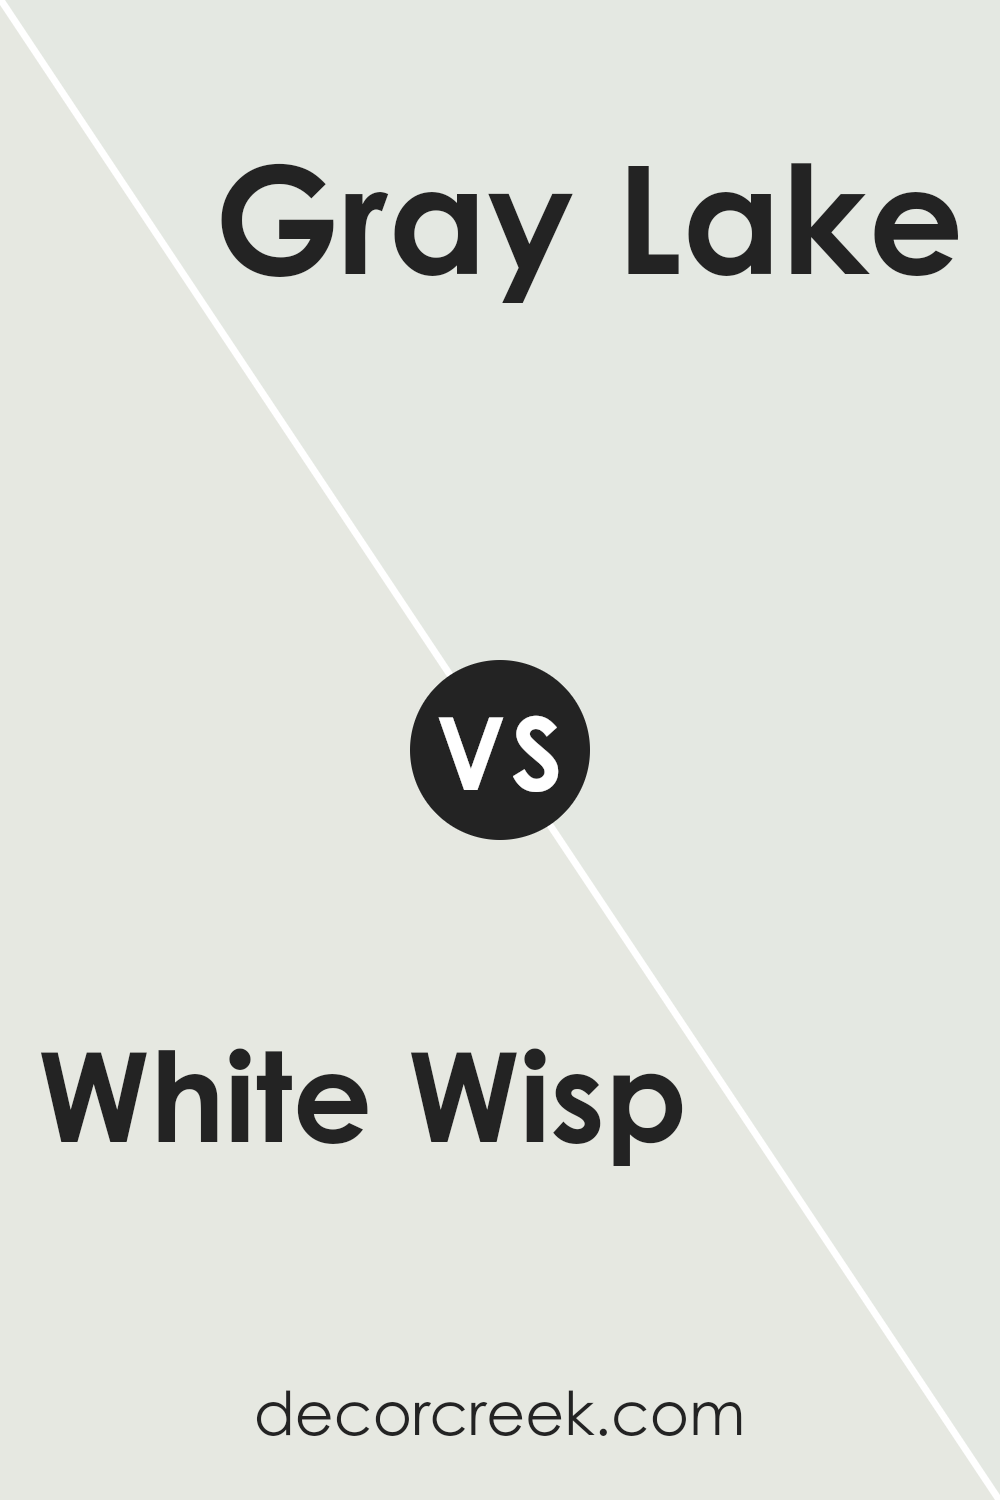 white_wisp_oc_54_vs_gray_lake_2138_70